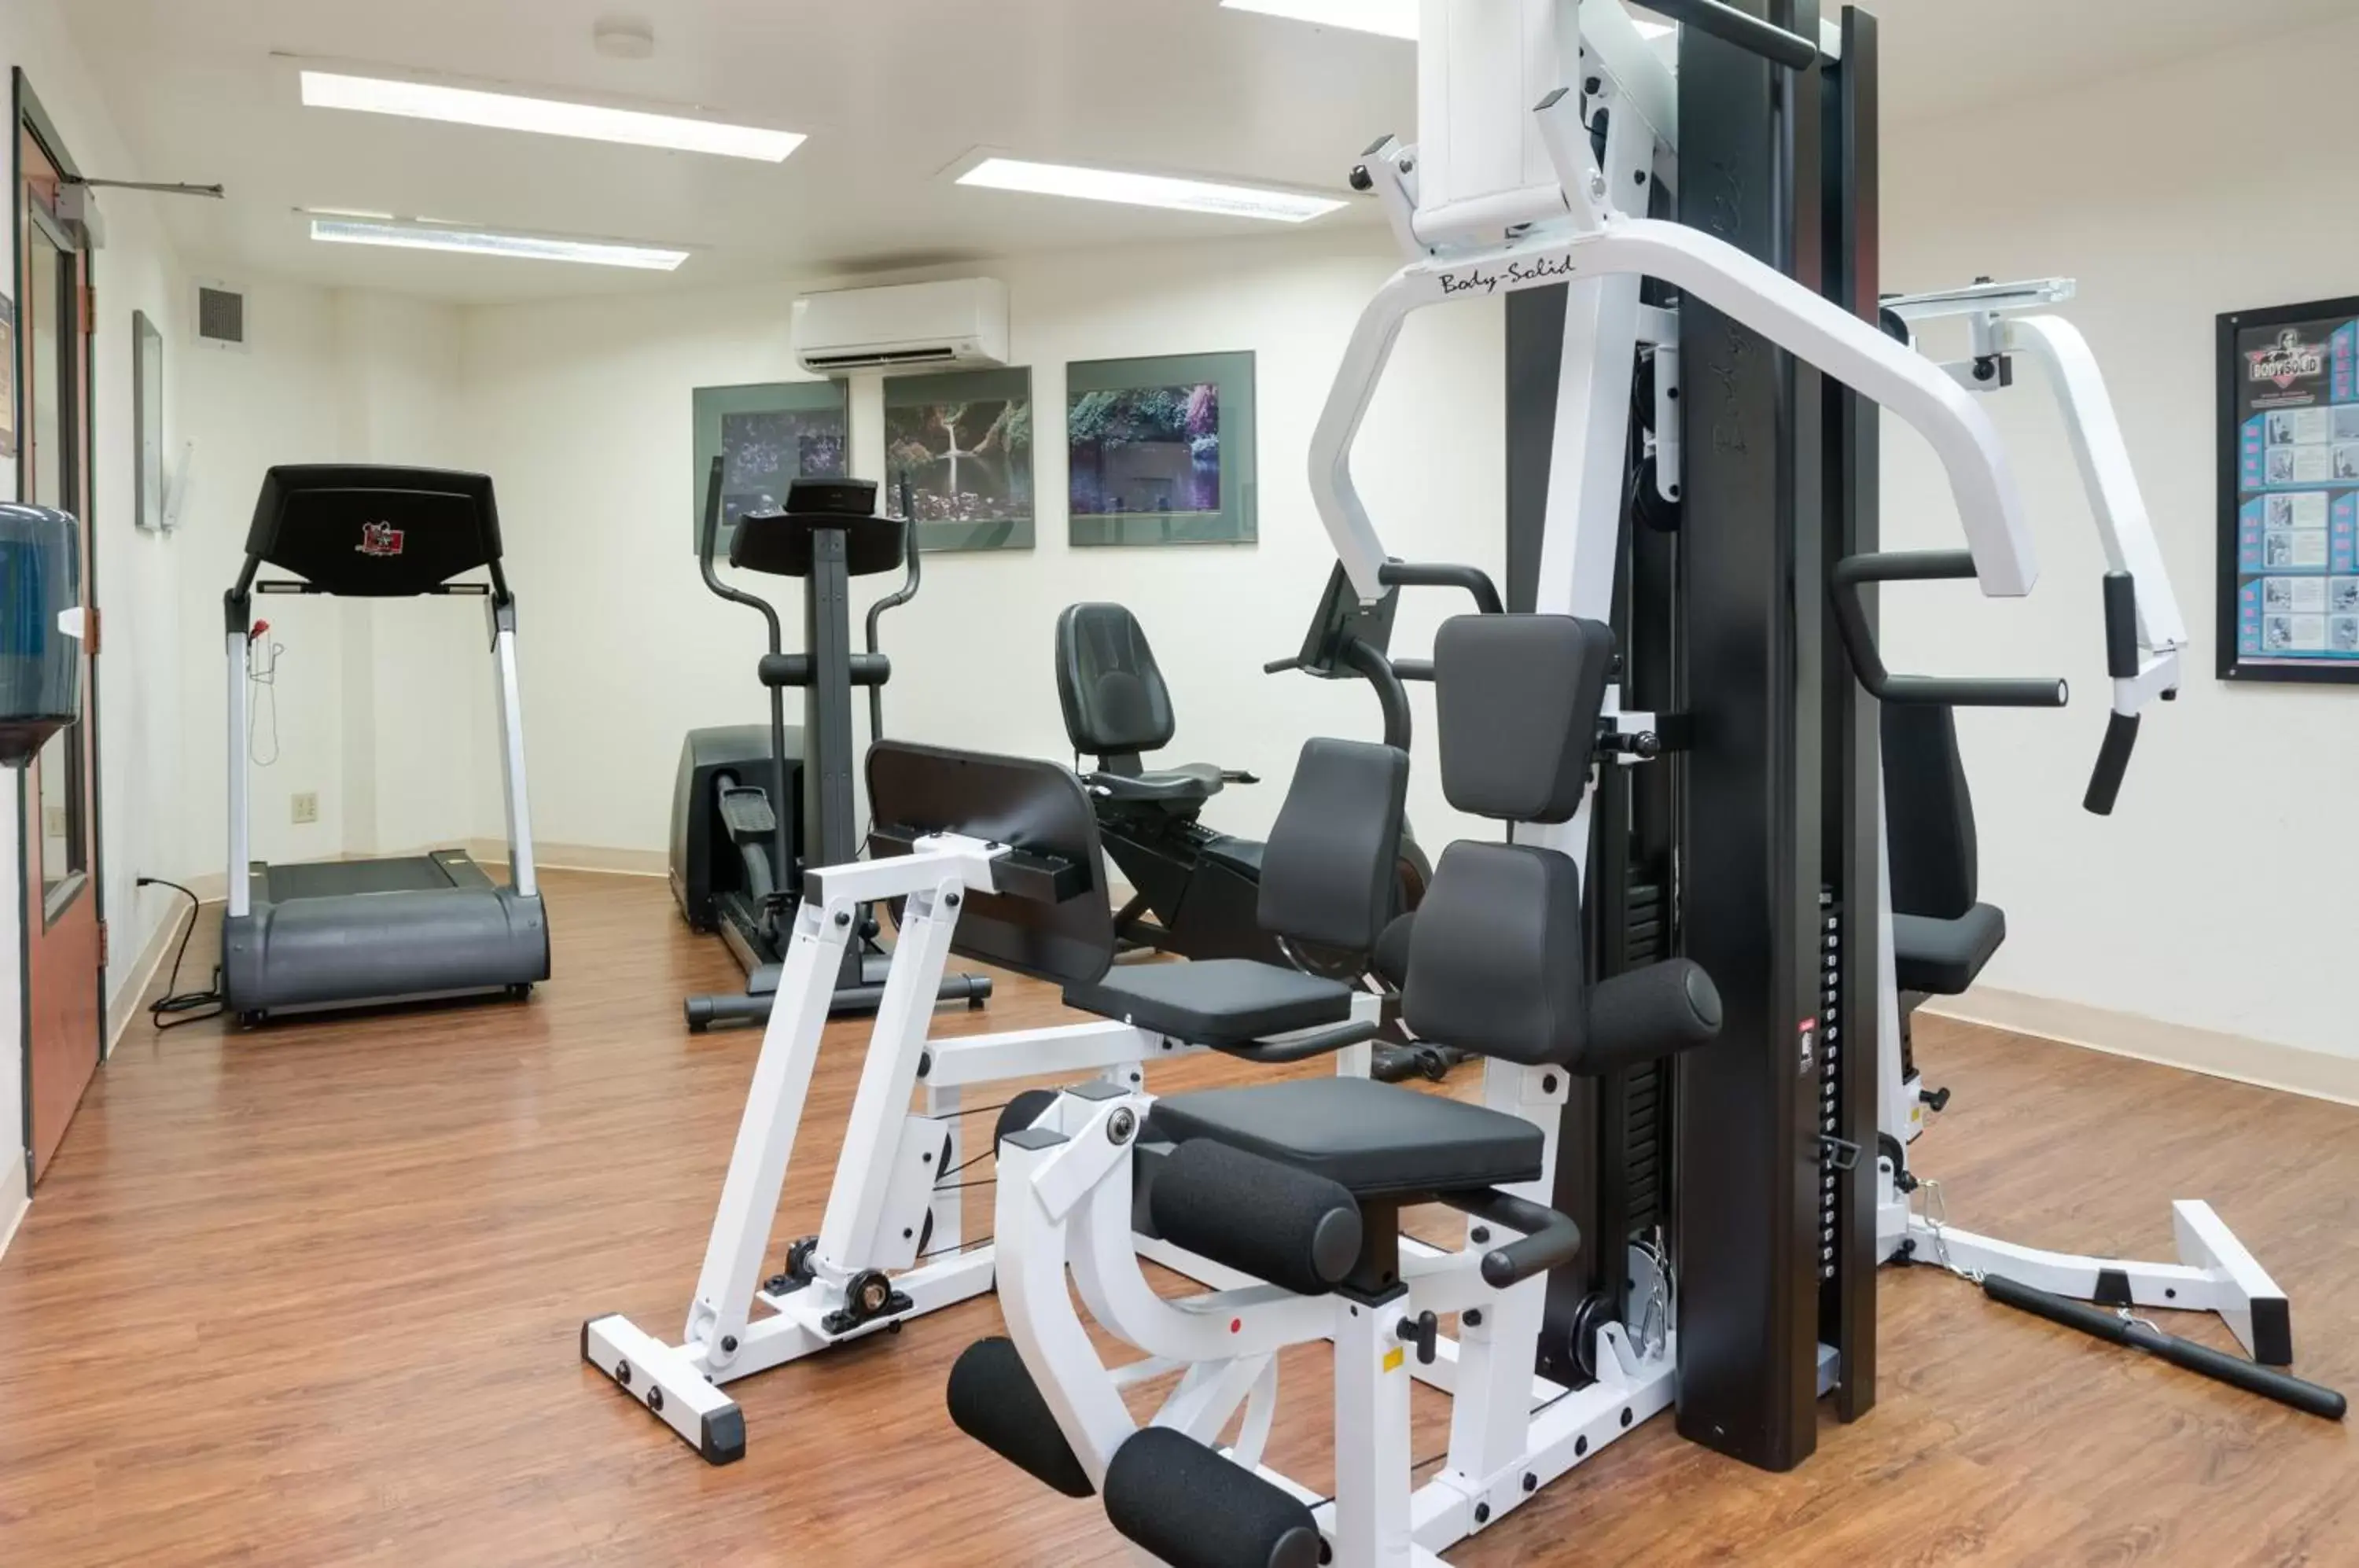 Fitness centre/facilities, Fitness Center/Facilities in Hallmark Resort in Cannon Beach